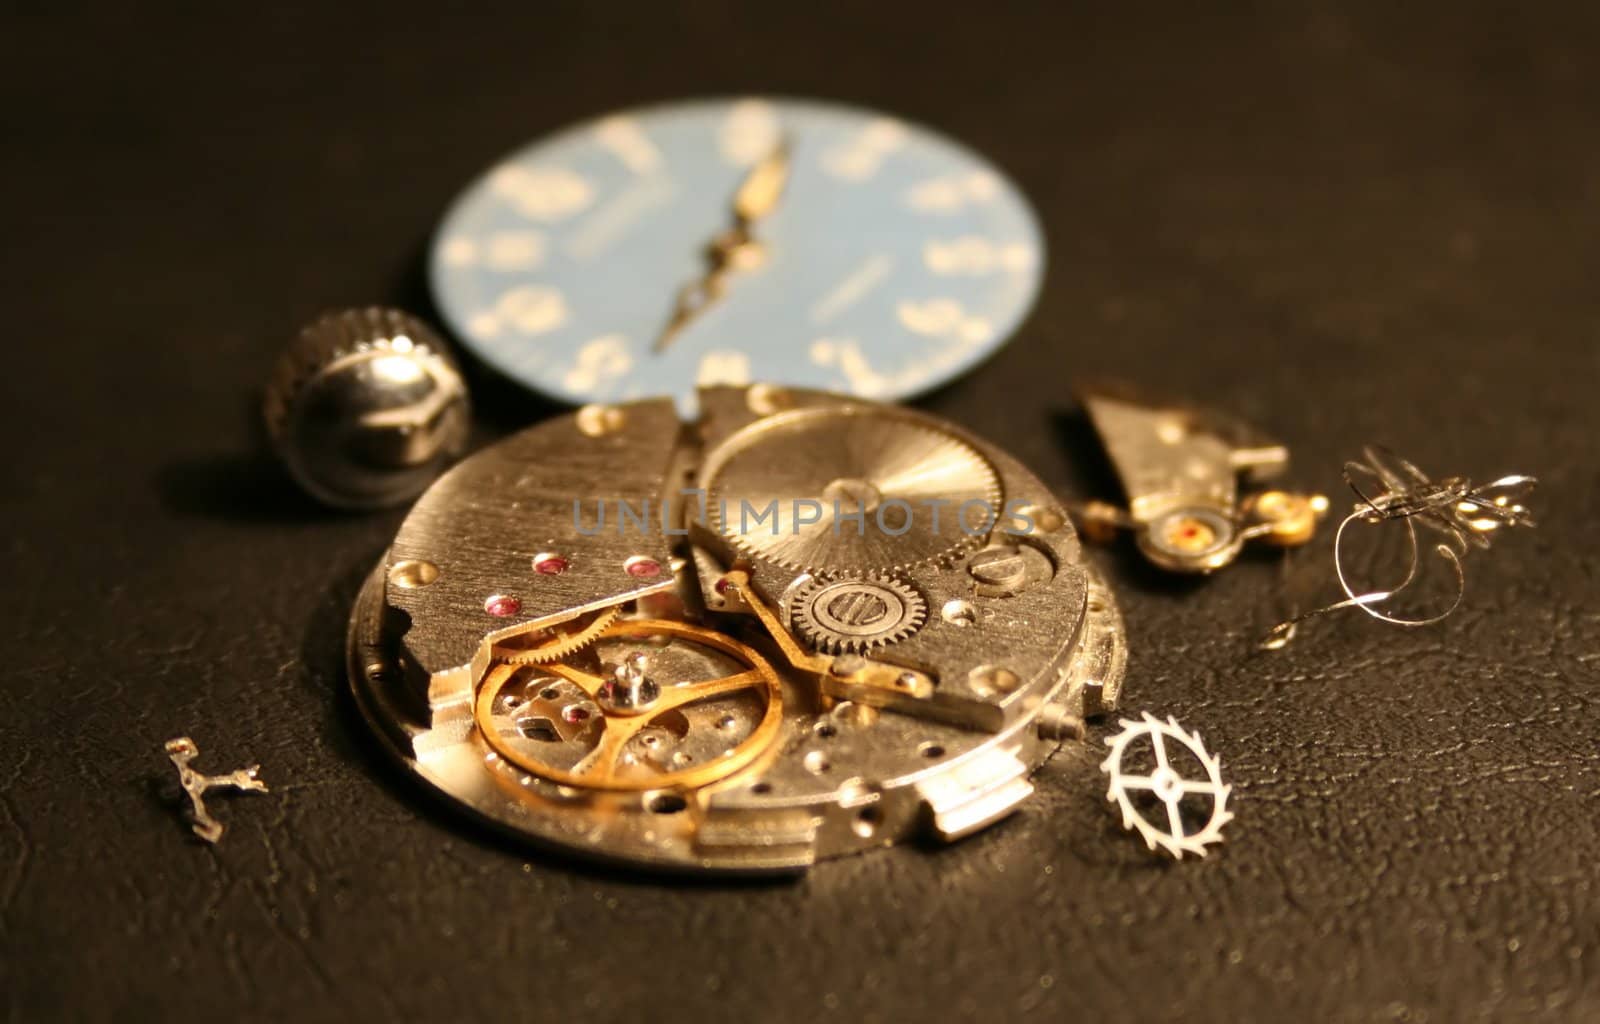 The disassembled clockwork